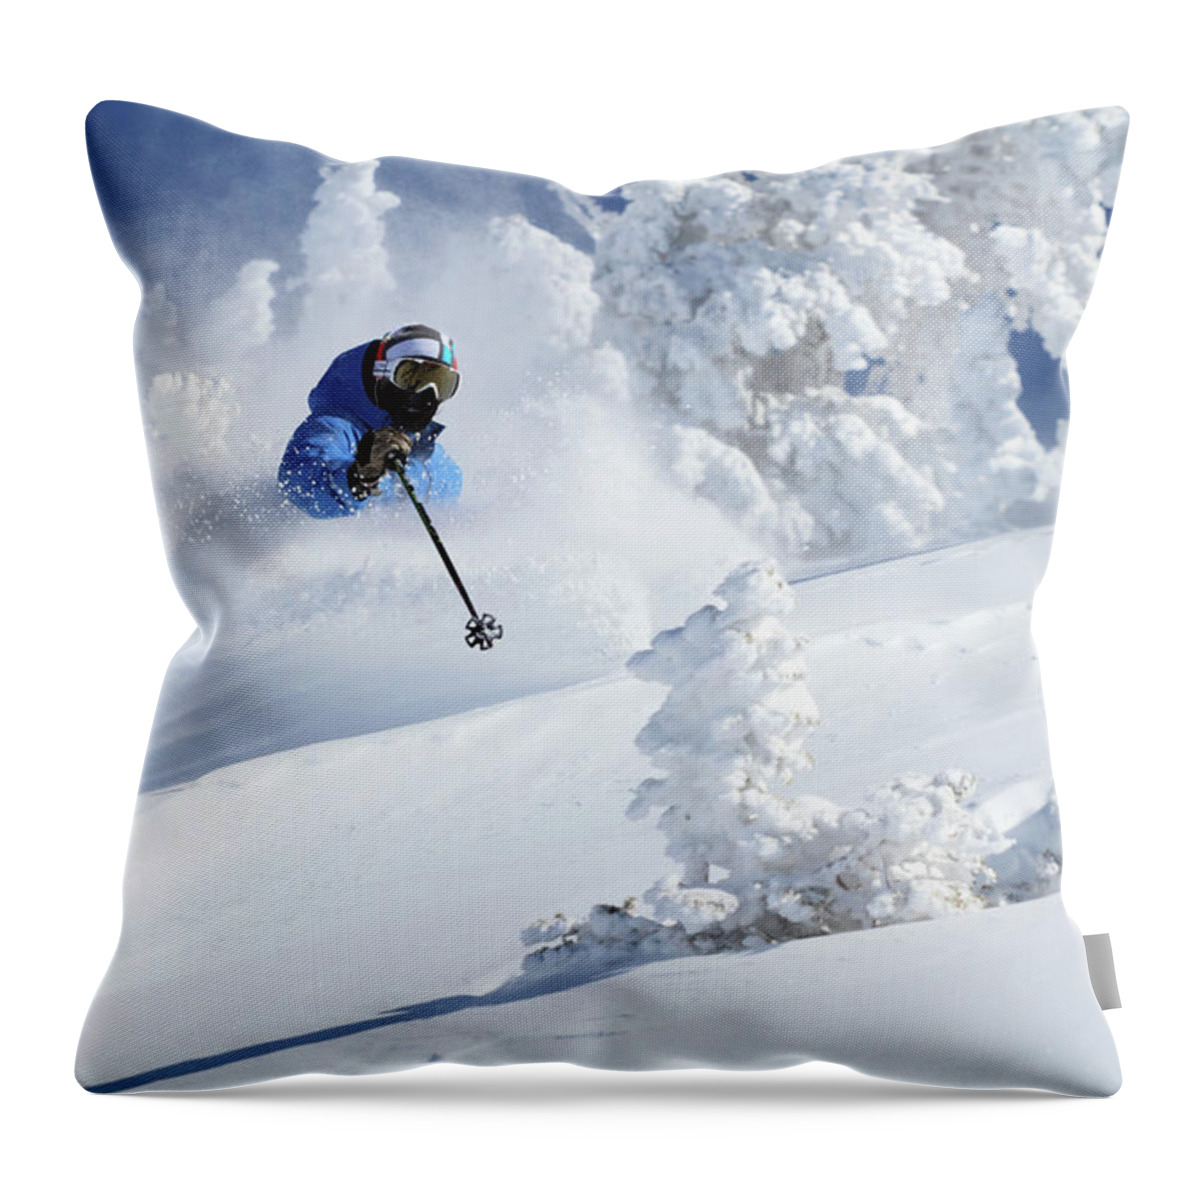 Utah Throw Pillow featuring the photograph Deep Powder Skier - Snowbird, Utah by Brett Pelletier